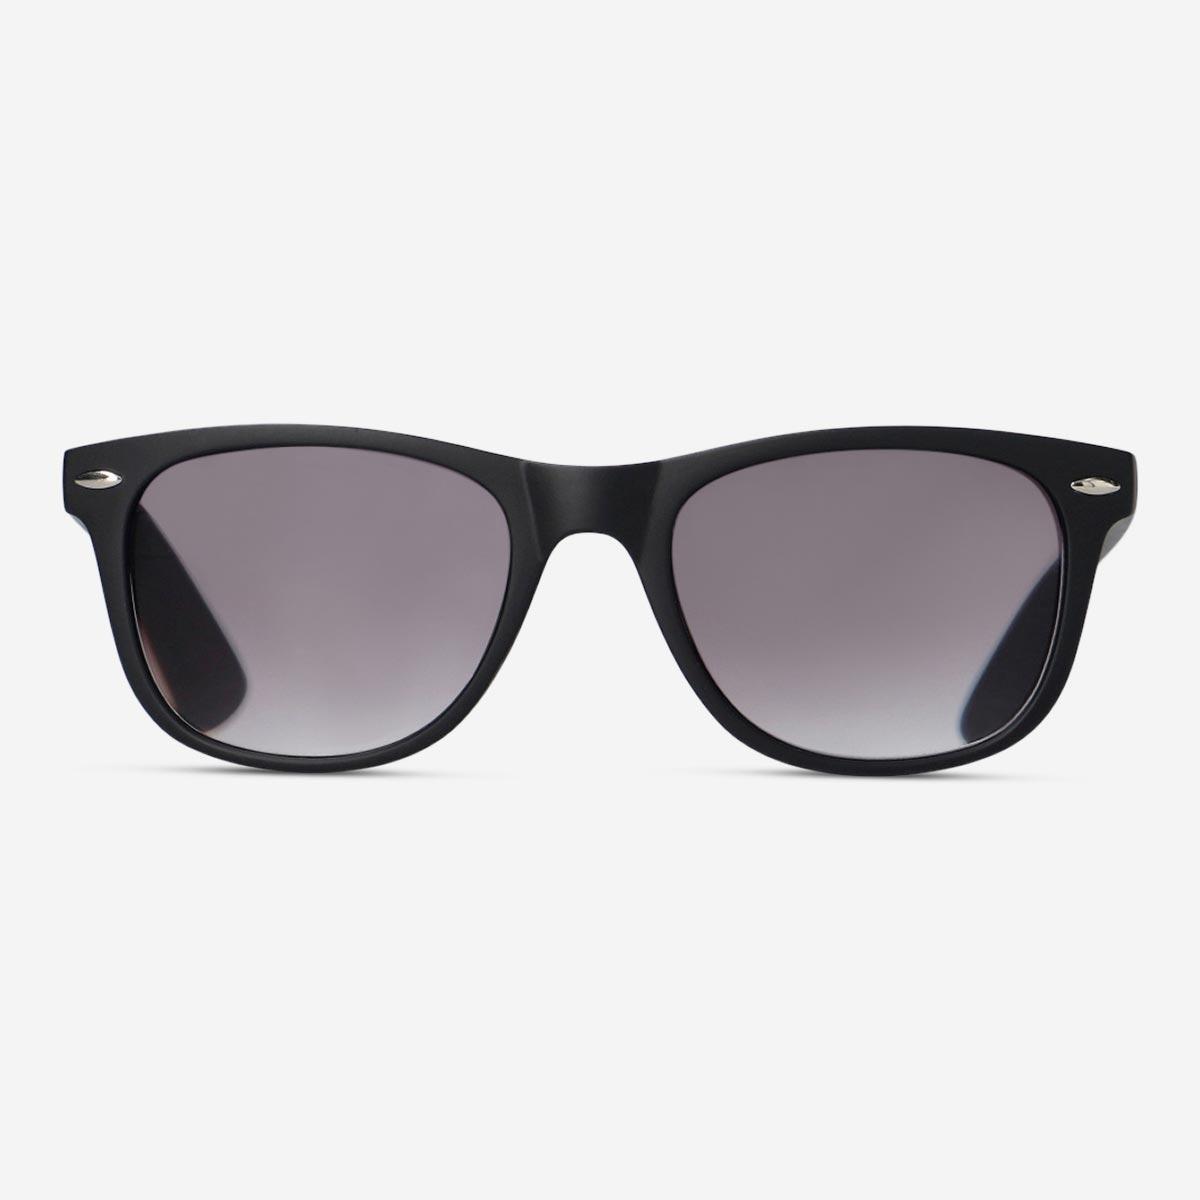 Black reading sunglasses. + 1.0